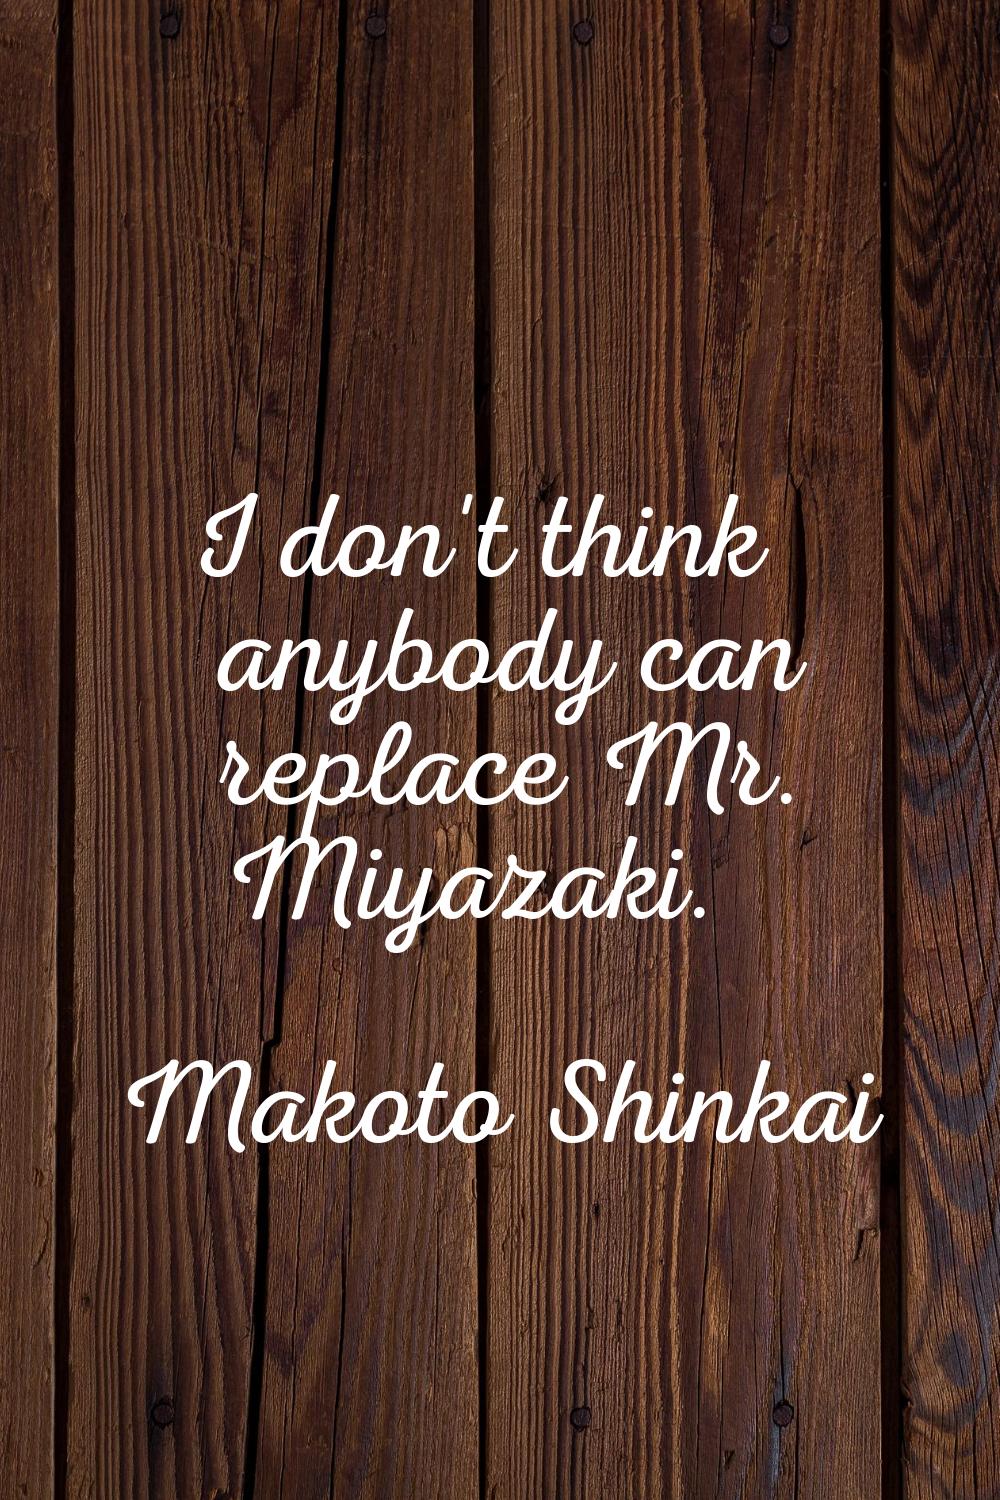 I don't think anybody can replace Mr. Miyazaki.